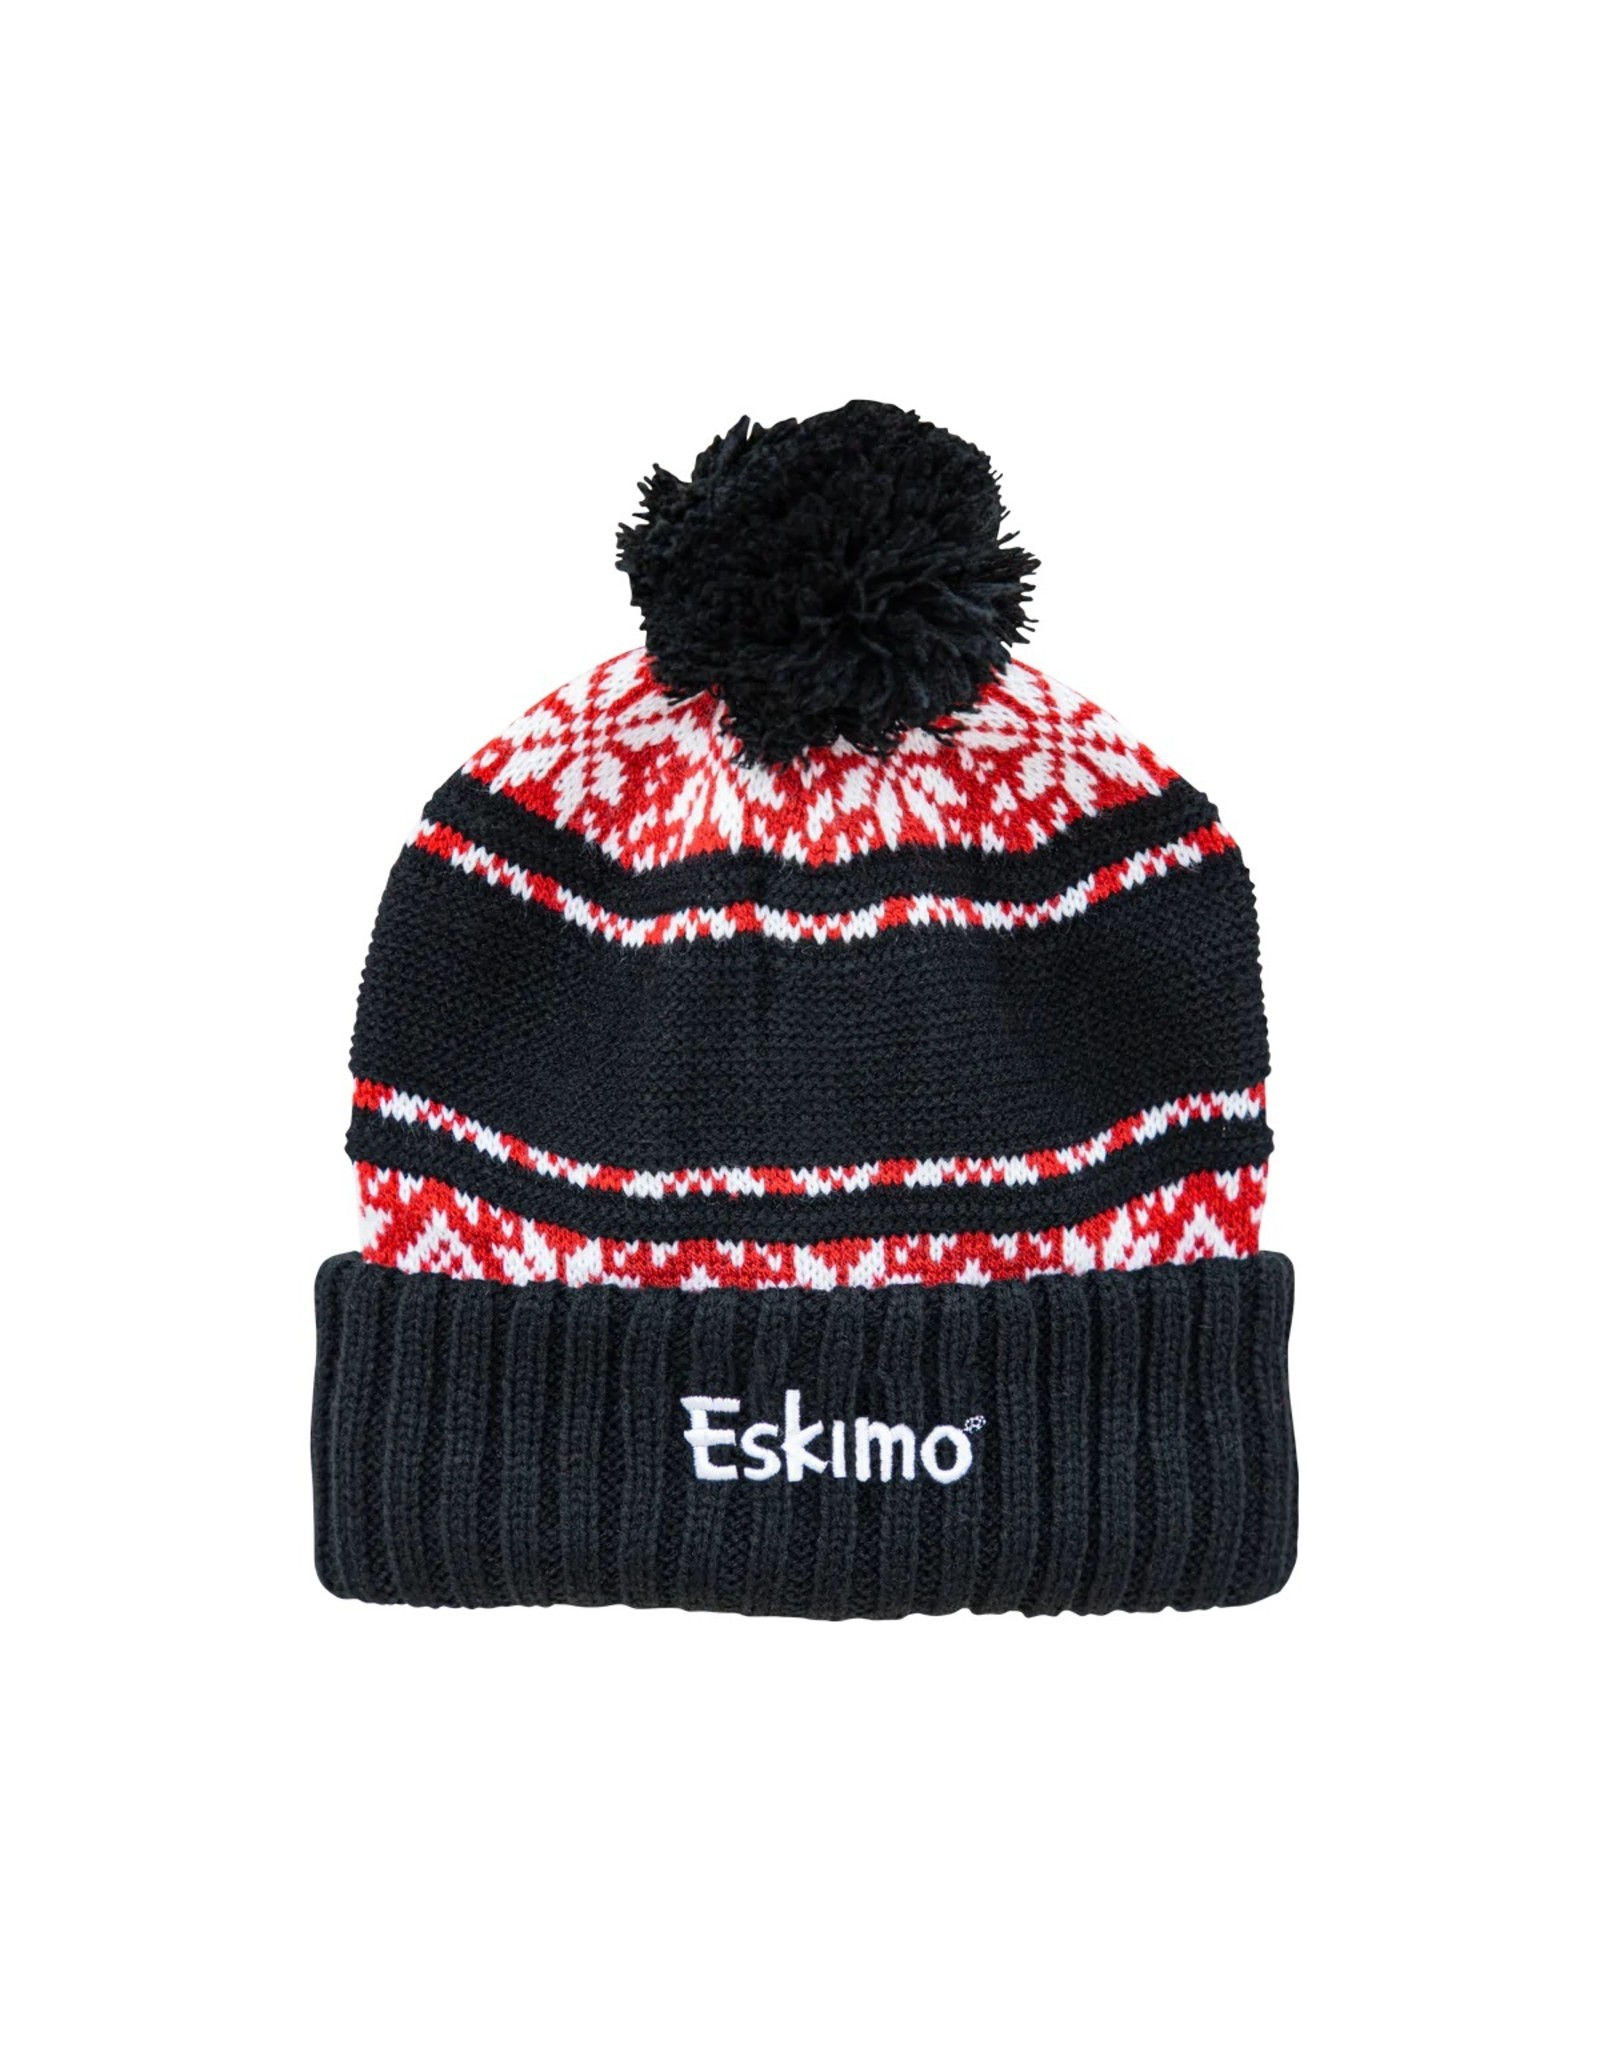 Eskimo Eskimo Nordic Knit Hat